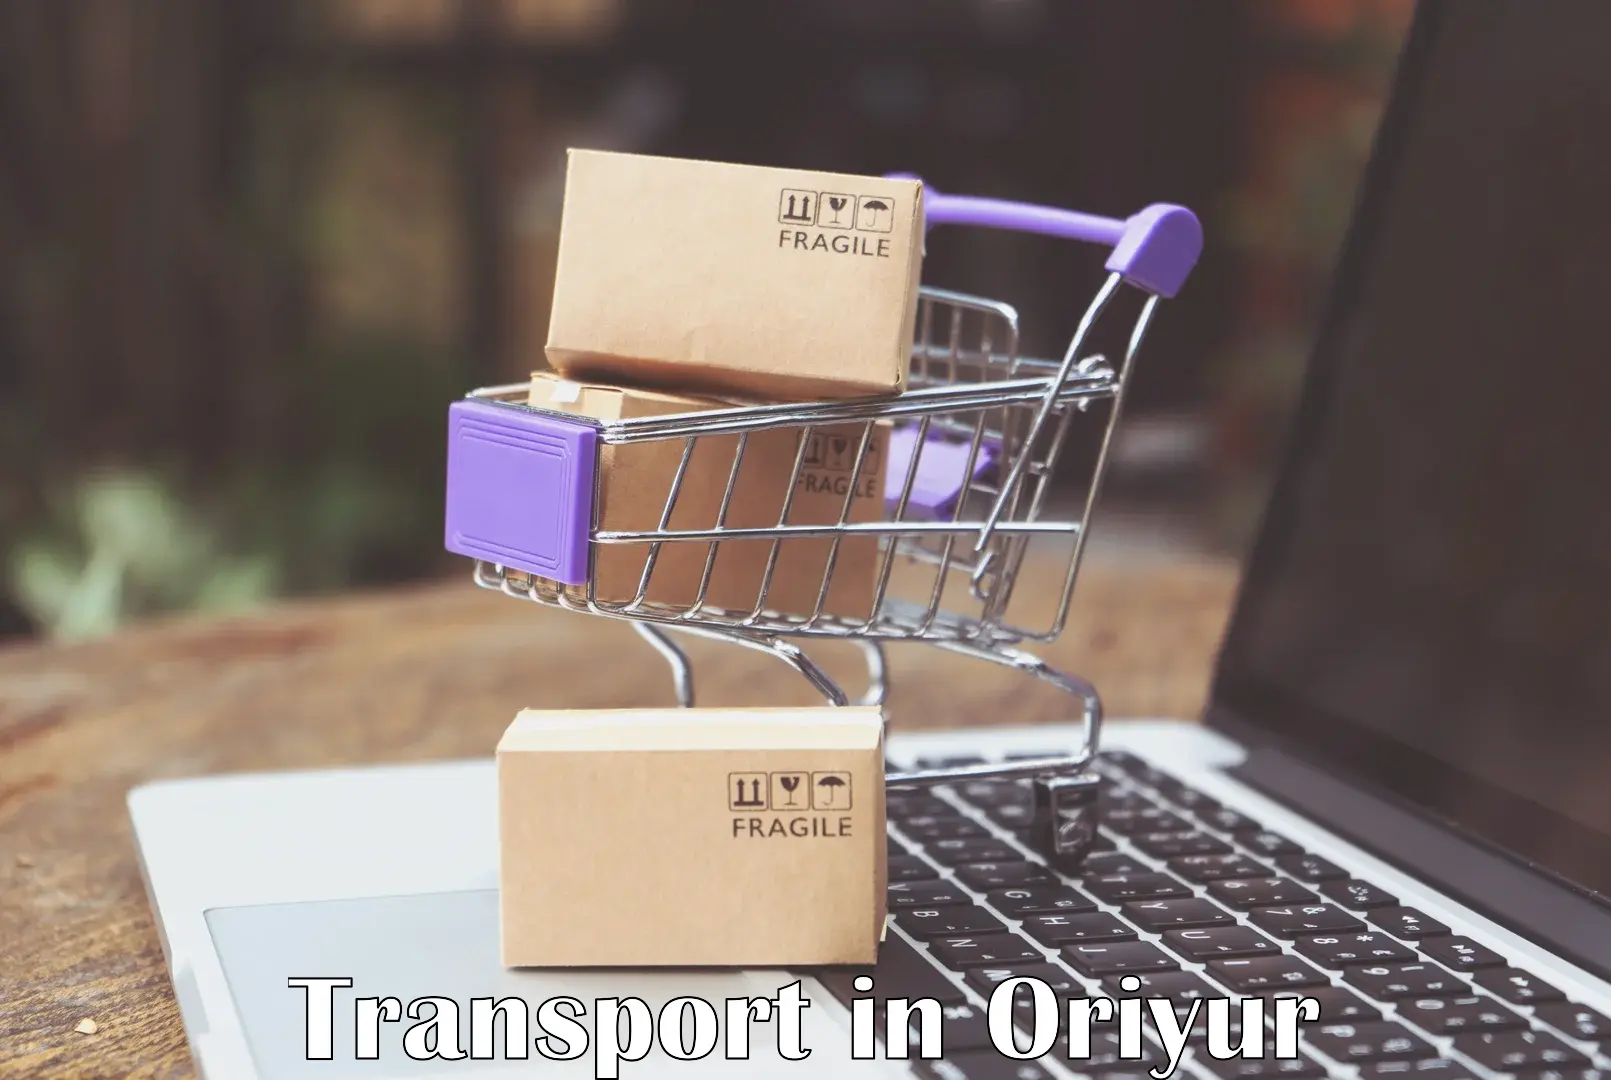 Transport in sharing in Oriyur